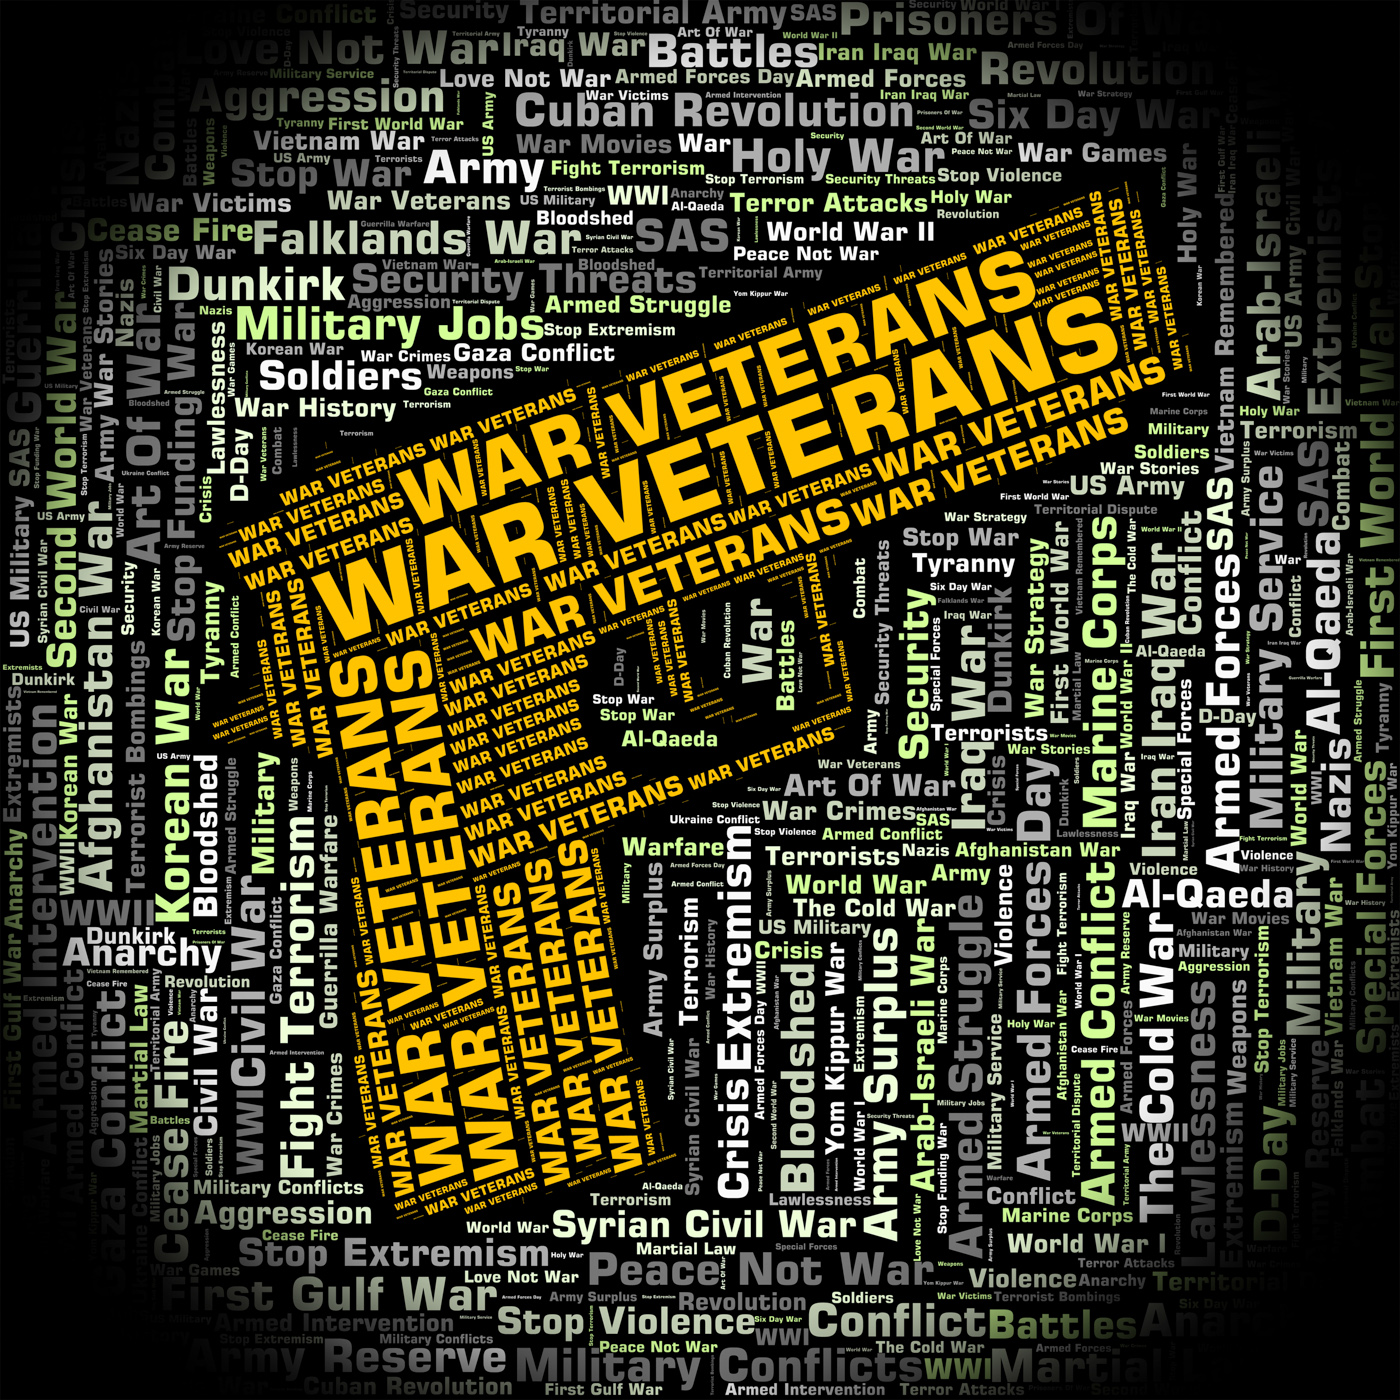 War veterans indicates long service and combat photo